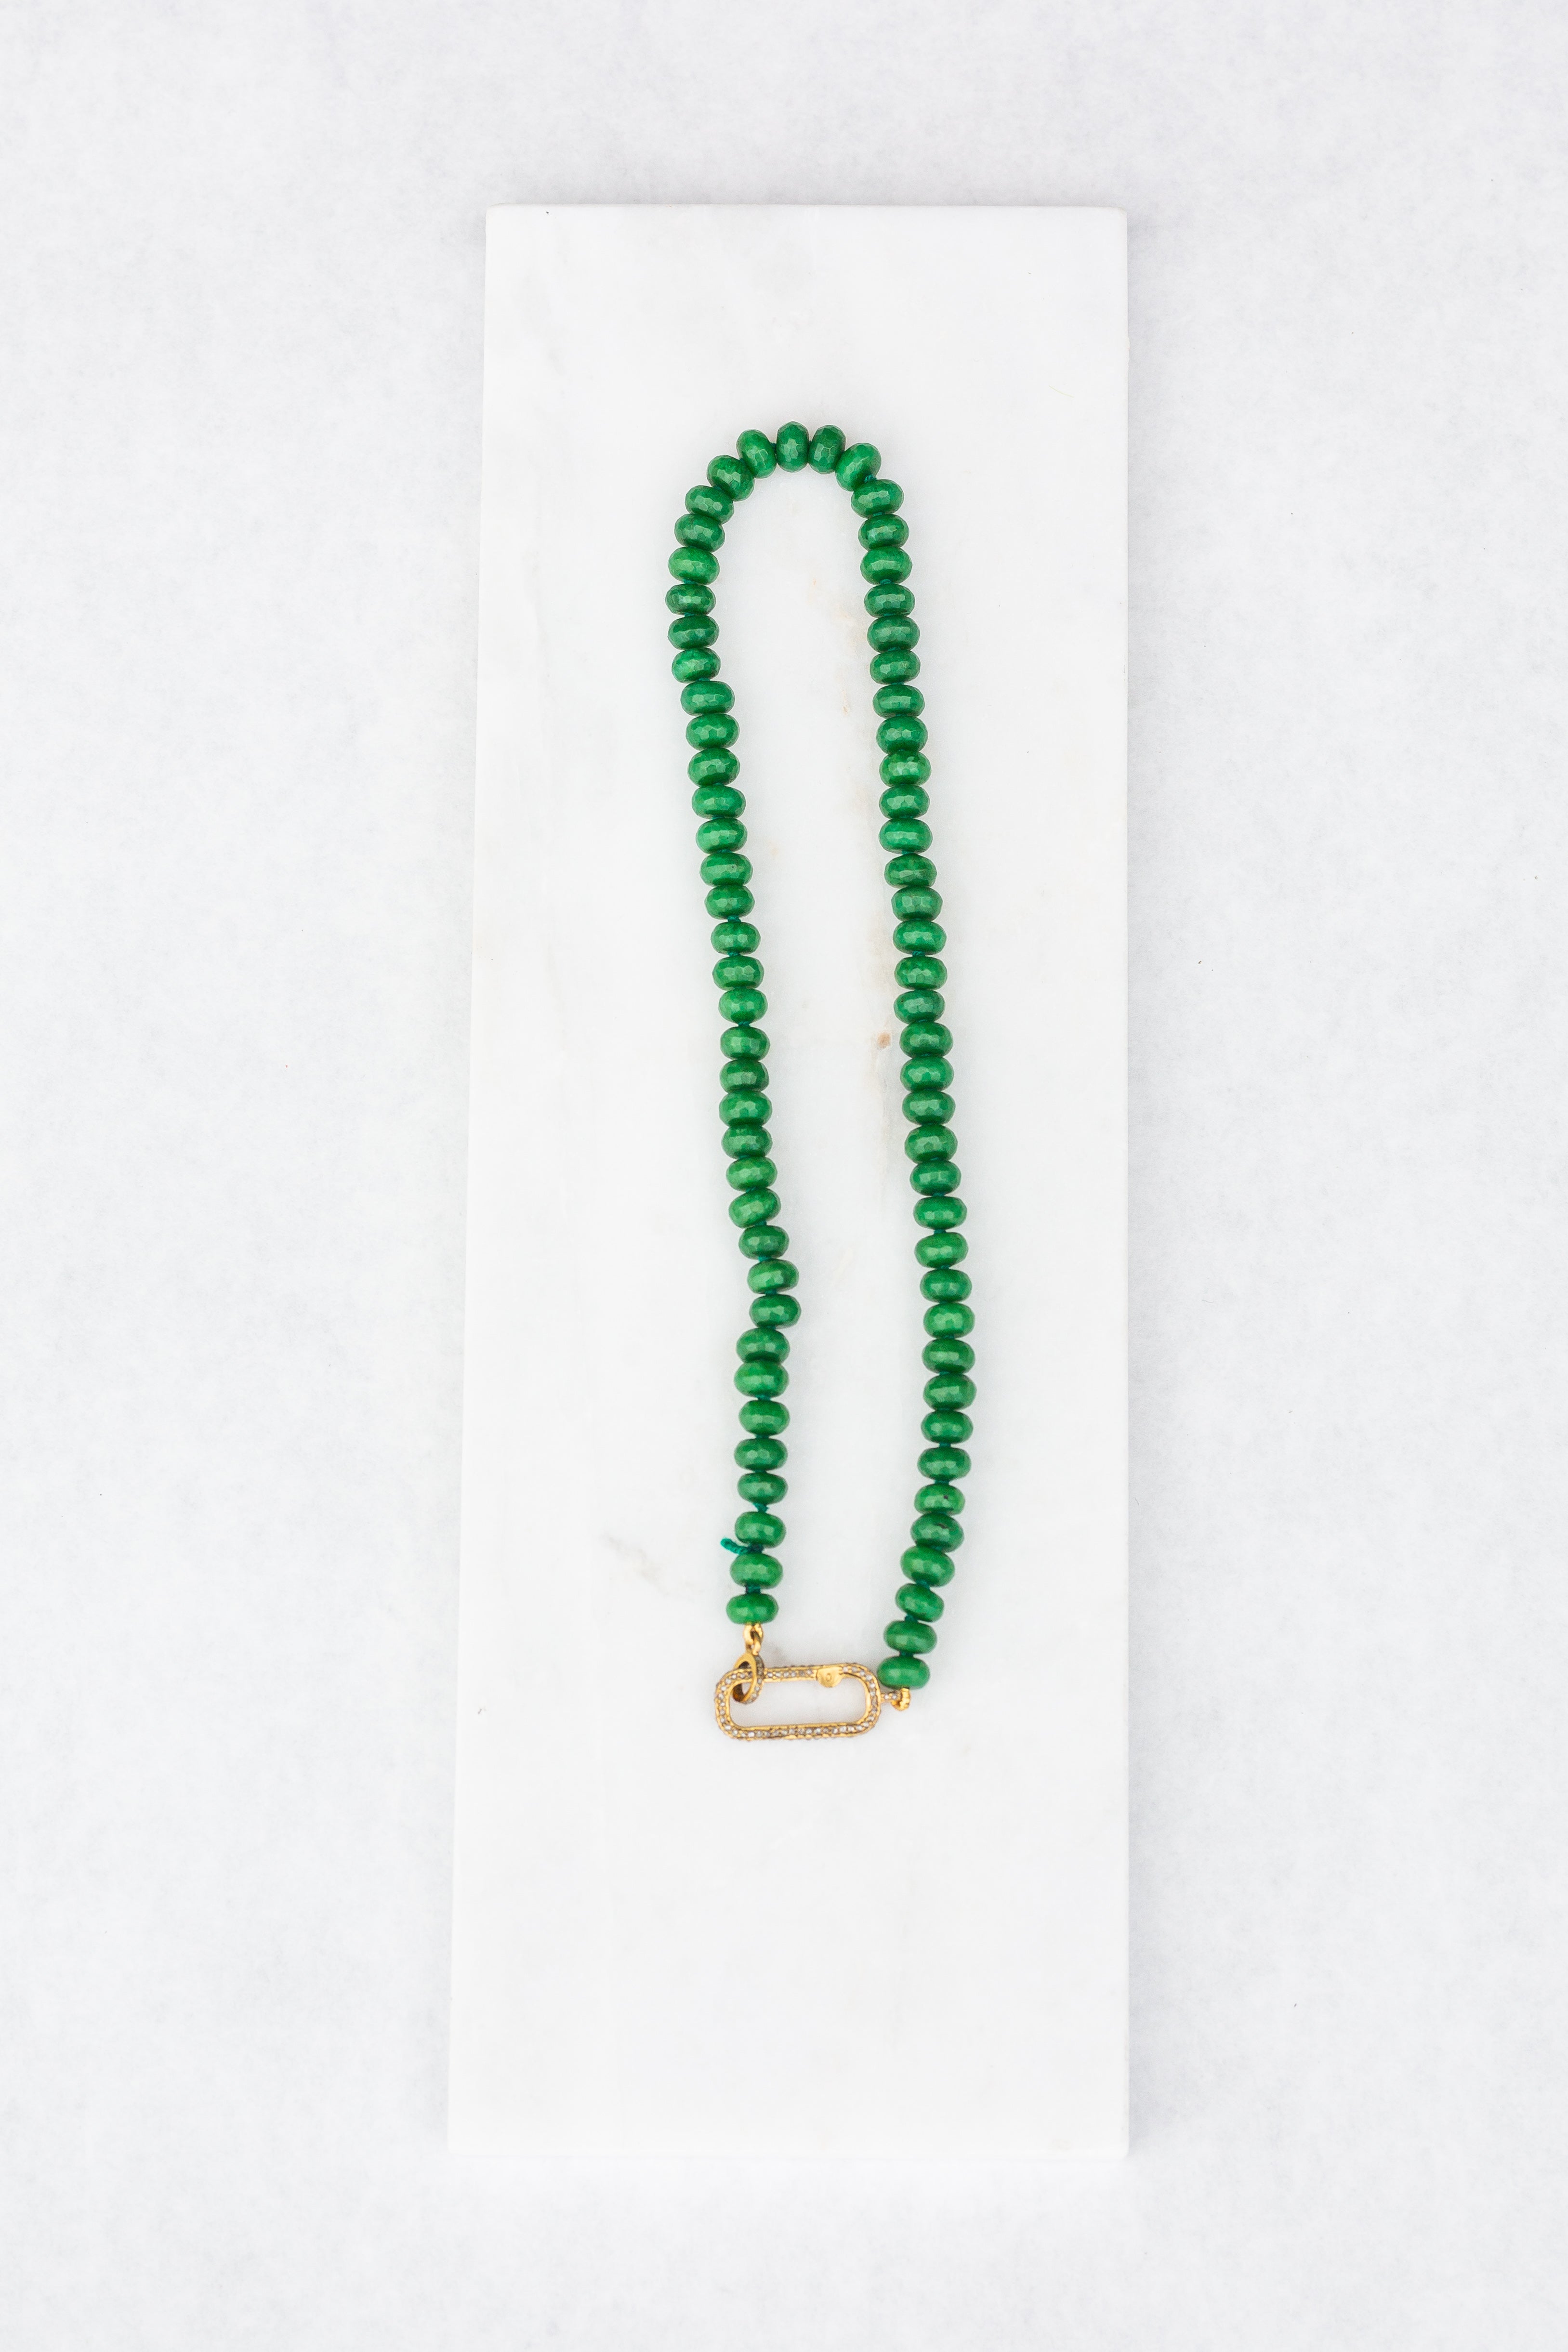 c108-17" bead emerald